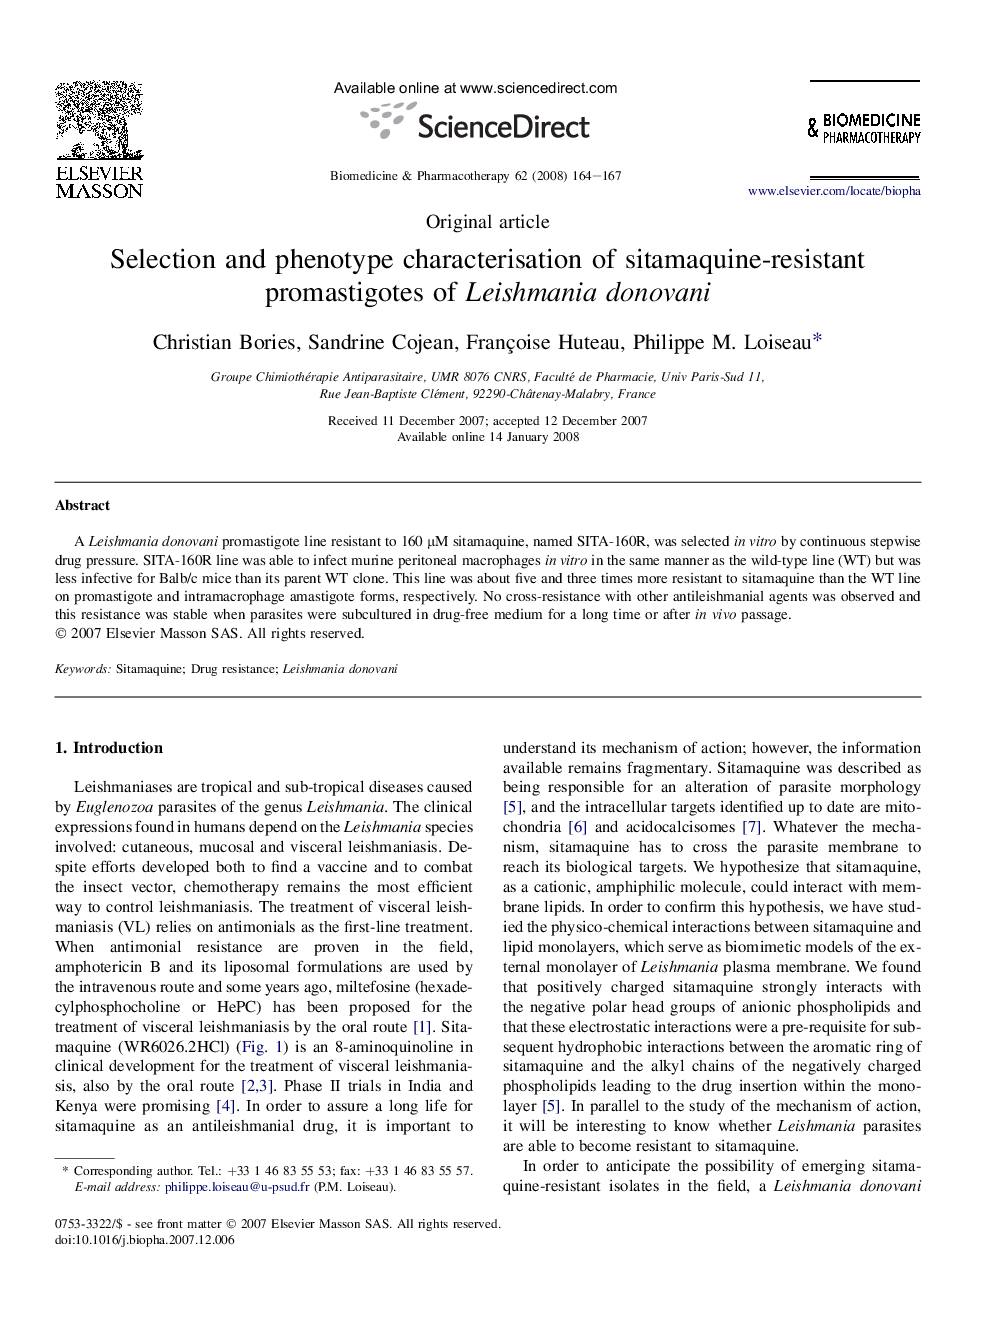 Selection and phenotype characterisation of sitamaquine-resistant promastigotes of Leishmania donovani